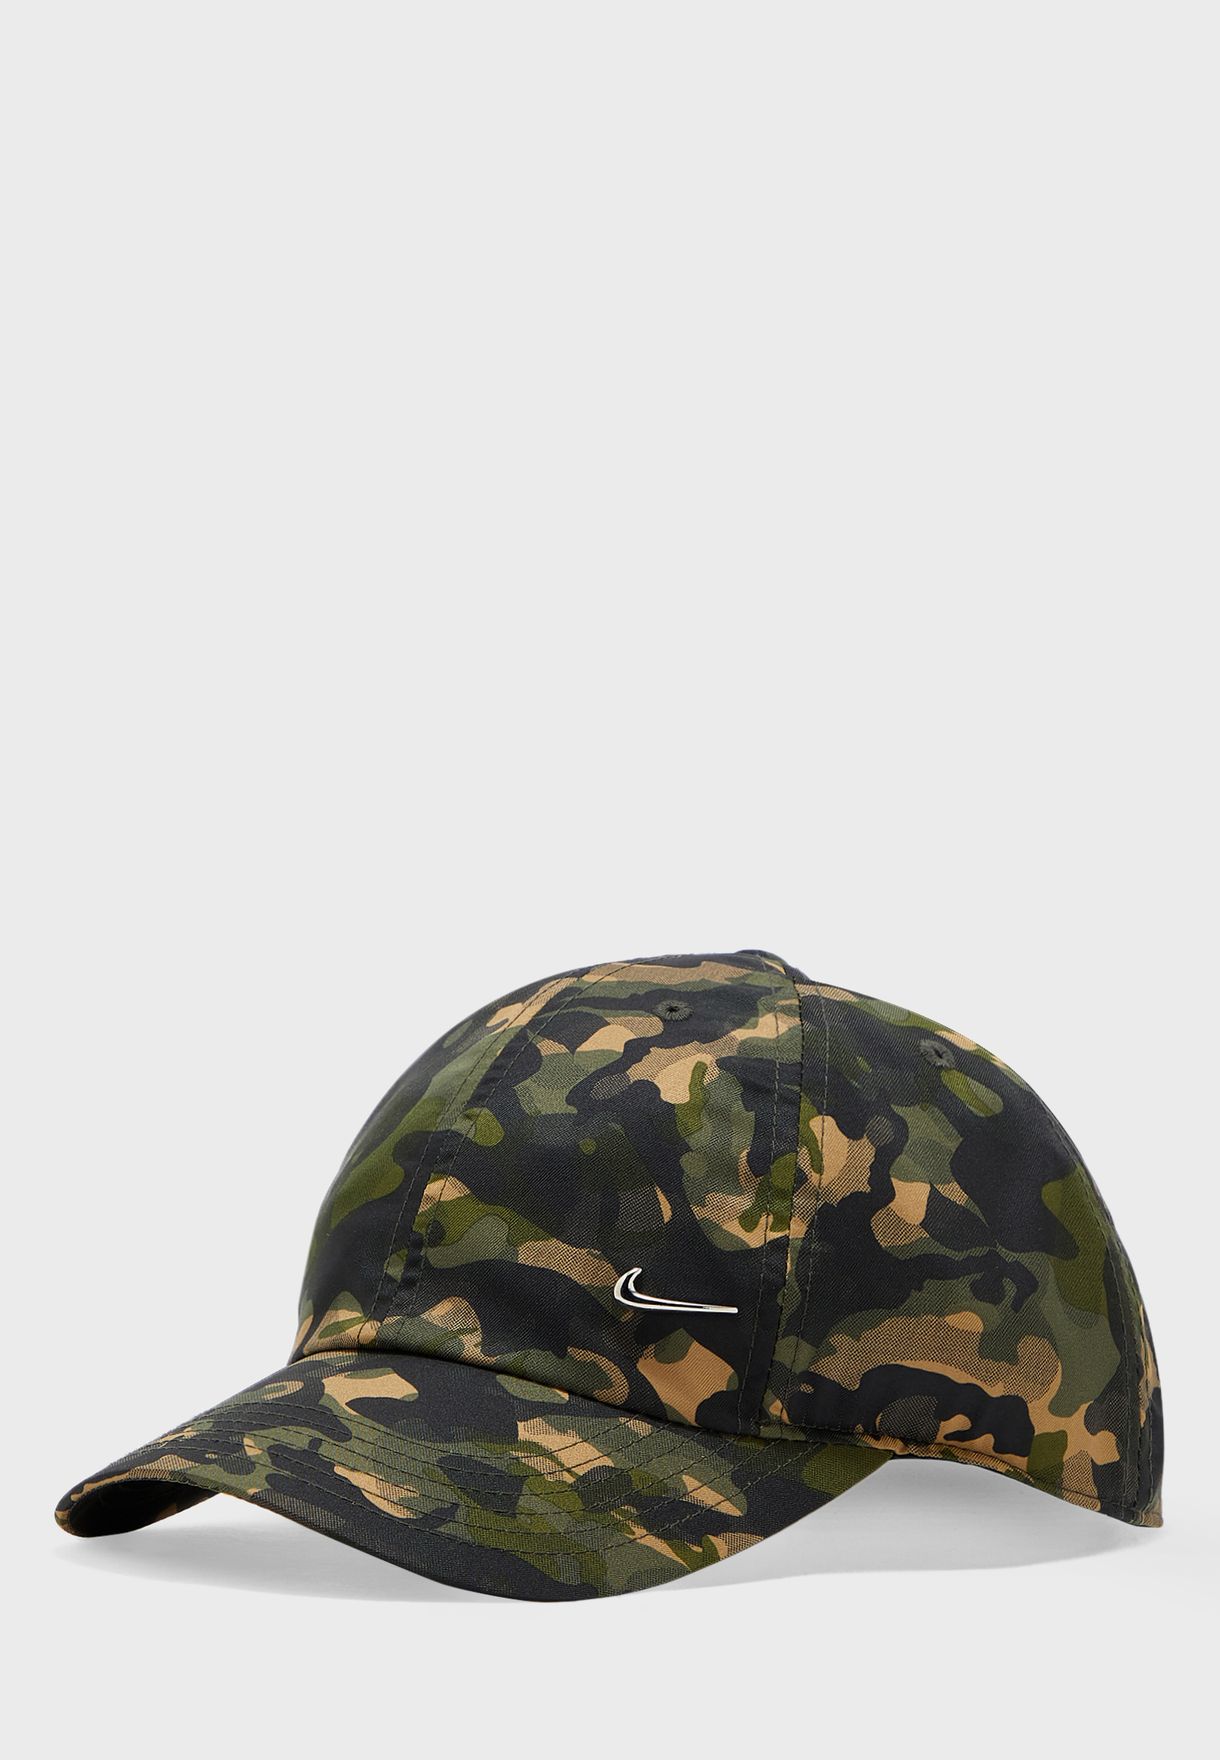 camouflage nike cap